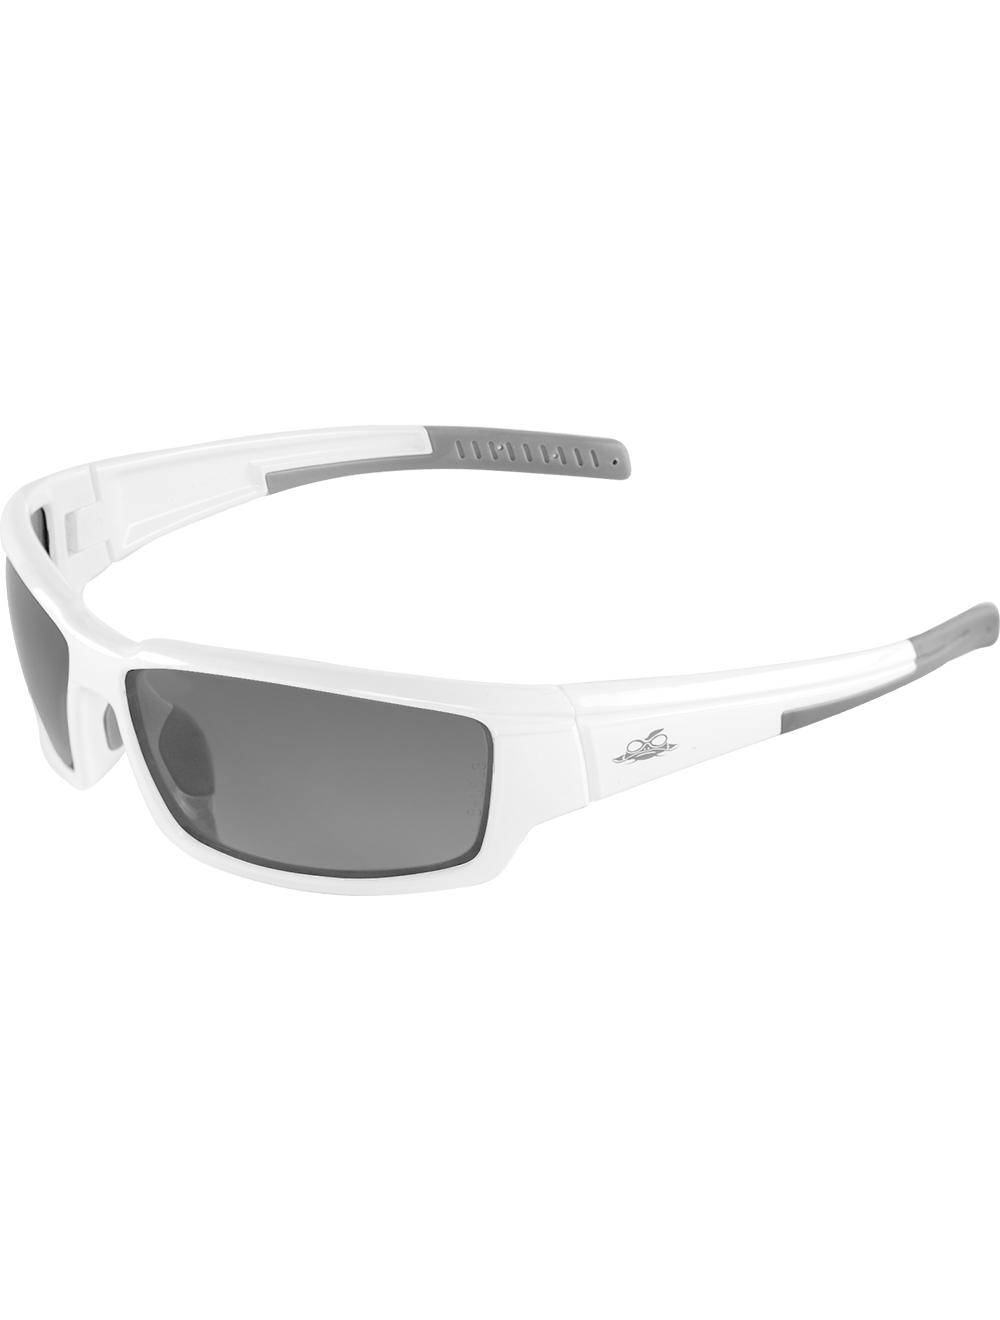 Maki® Silver Mirror Anti-Fog Lens, Shiny White Frame Safety Glasses - LIMITED STOCK - BH14187AF